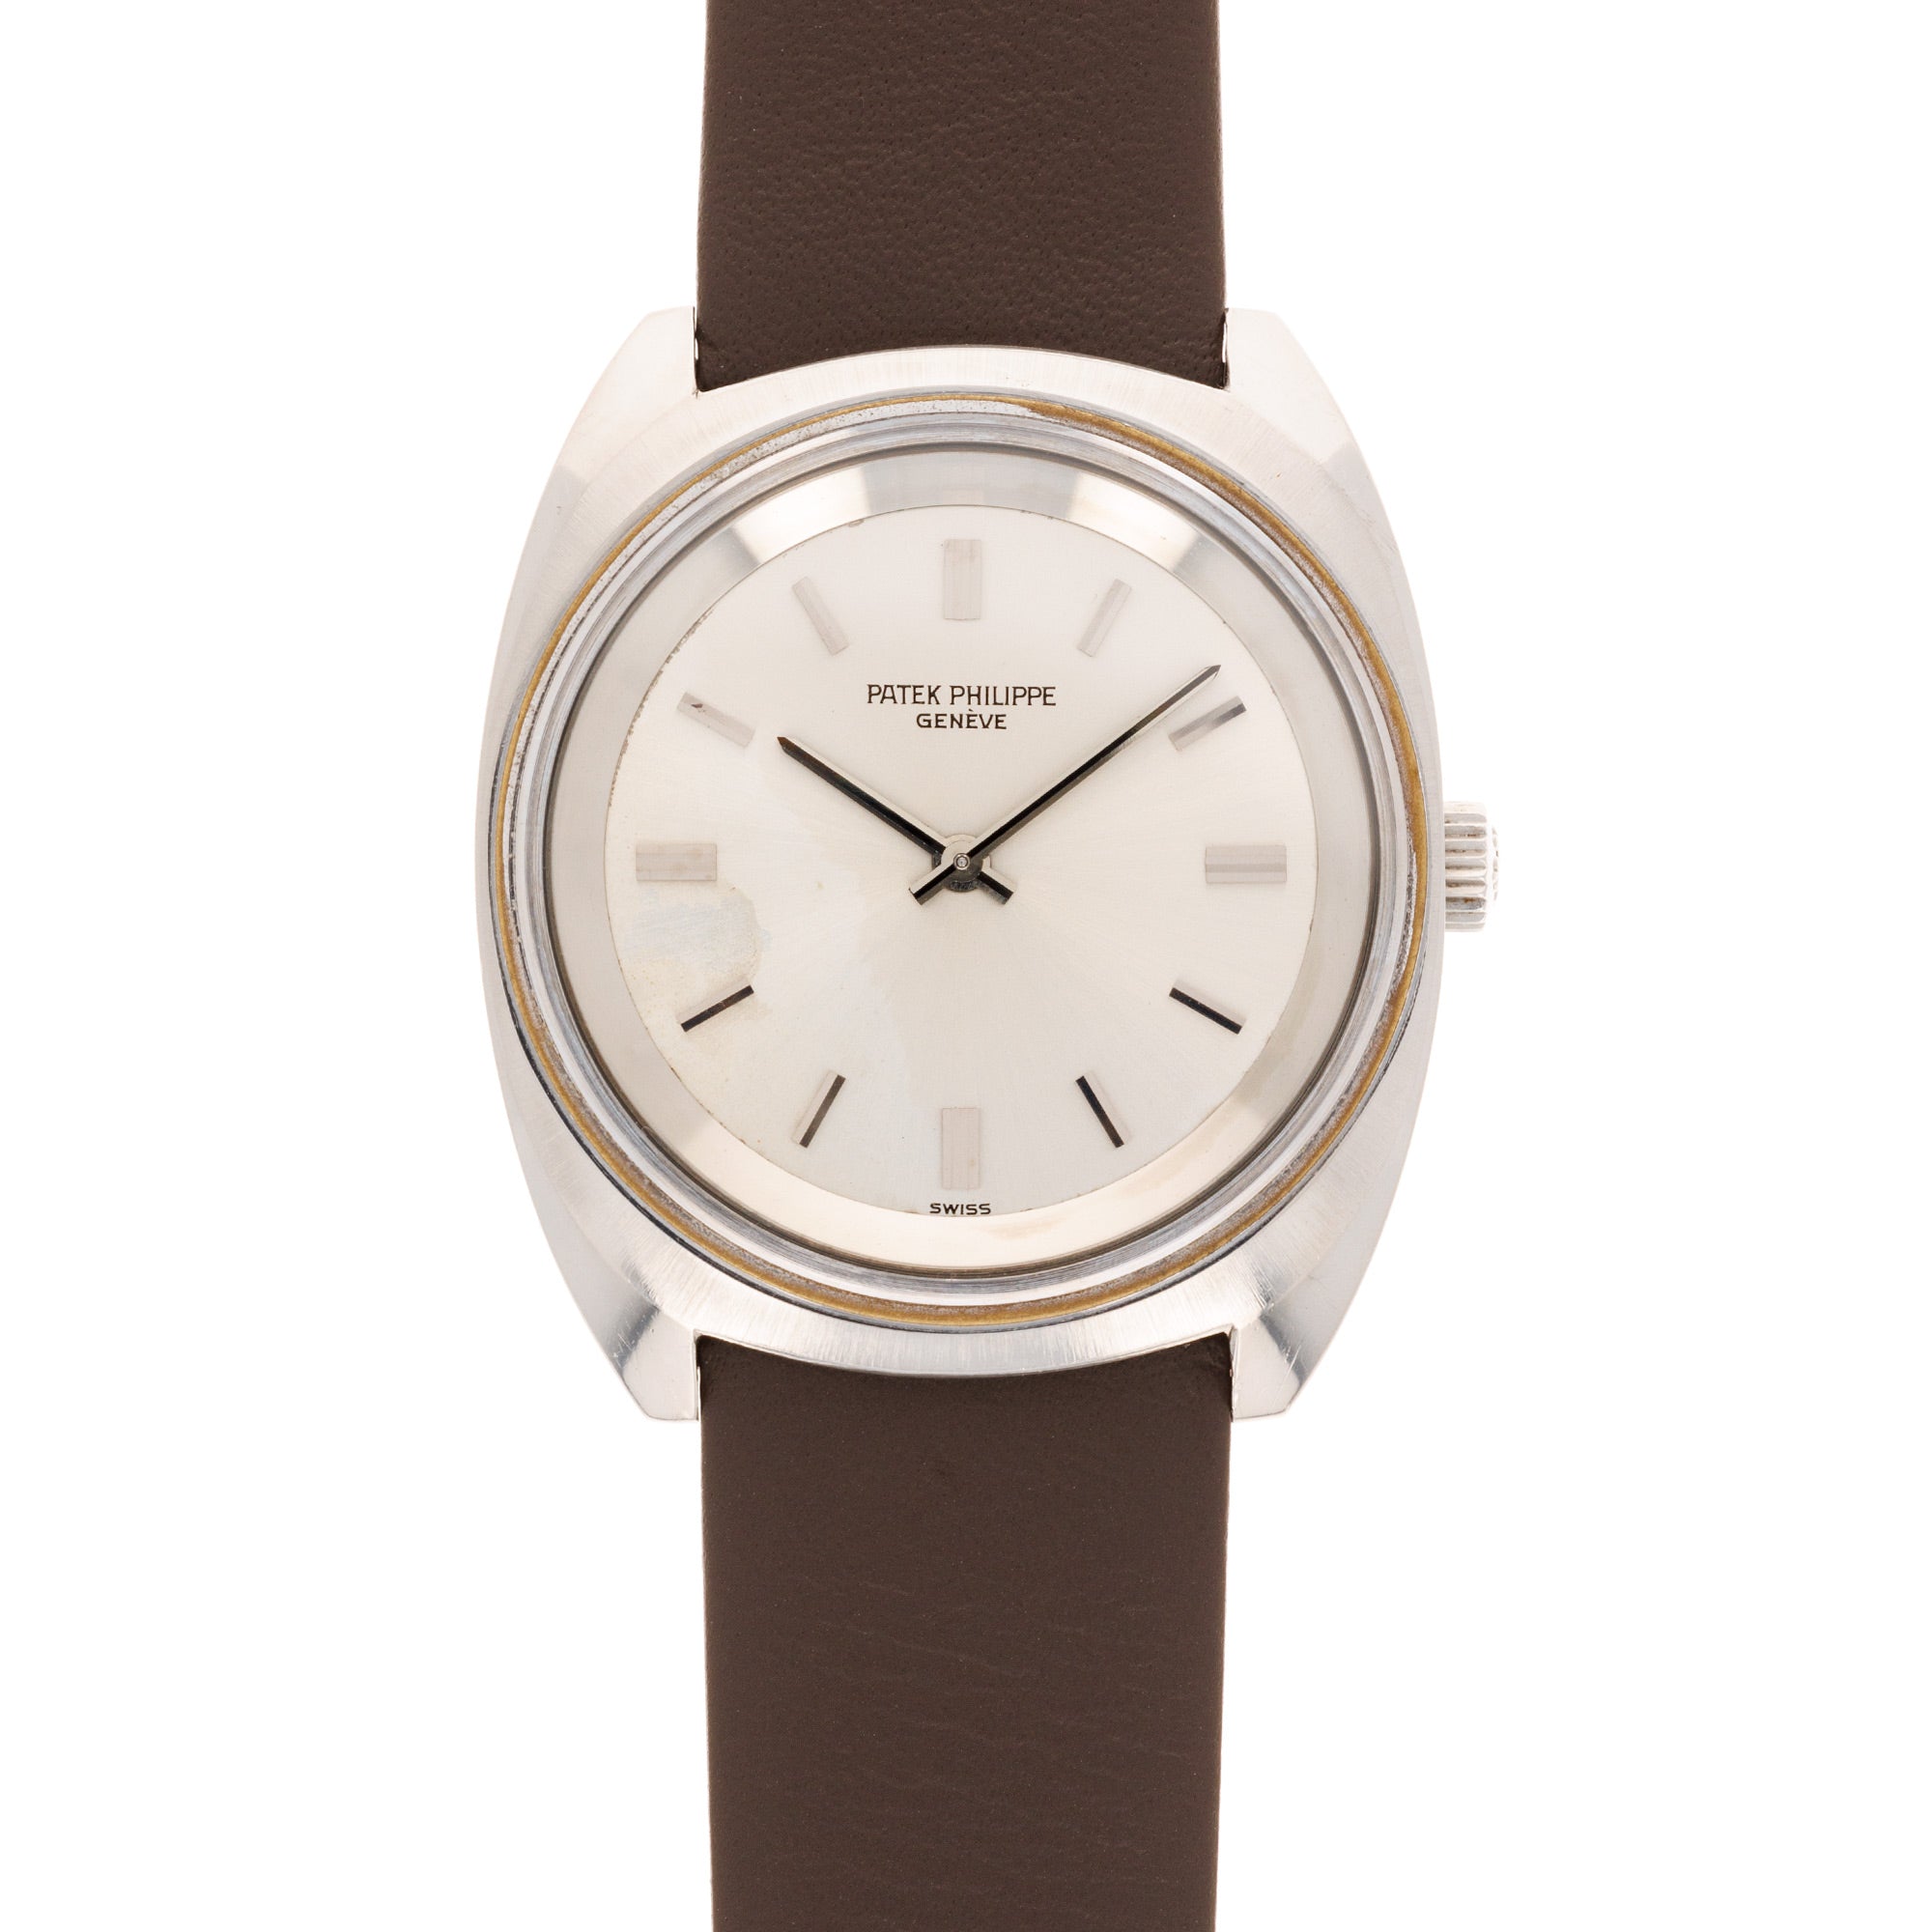 Patek Philippe - Patek Philippe Steel Tonneau Watch Ref. 3579 - The Keystone Watches